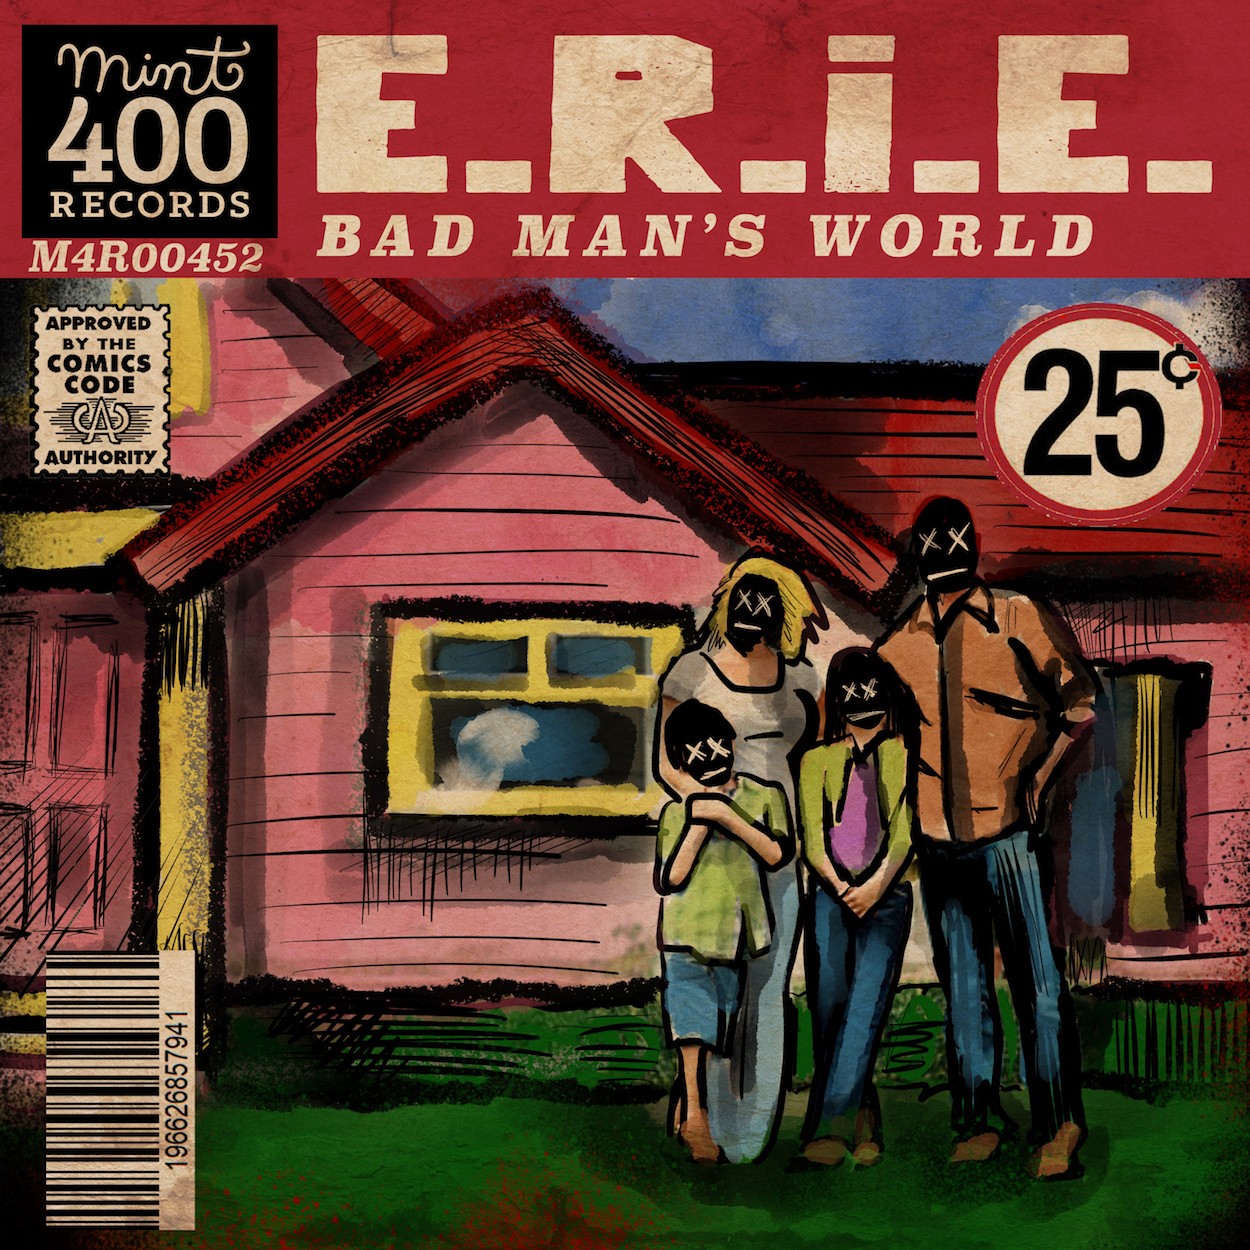 E.R.I.E. “Bad Man’s World” single artwork